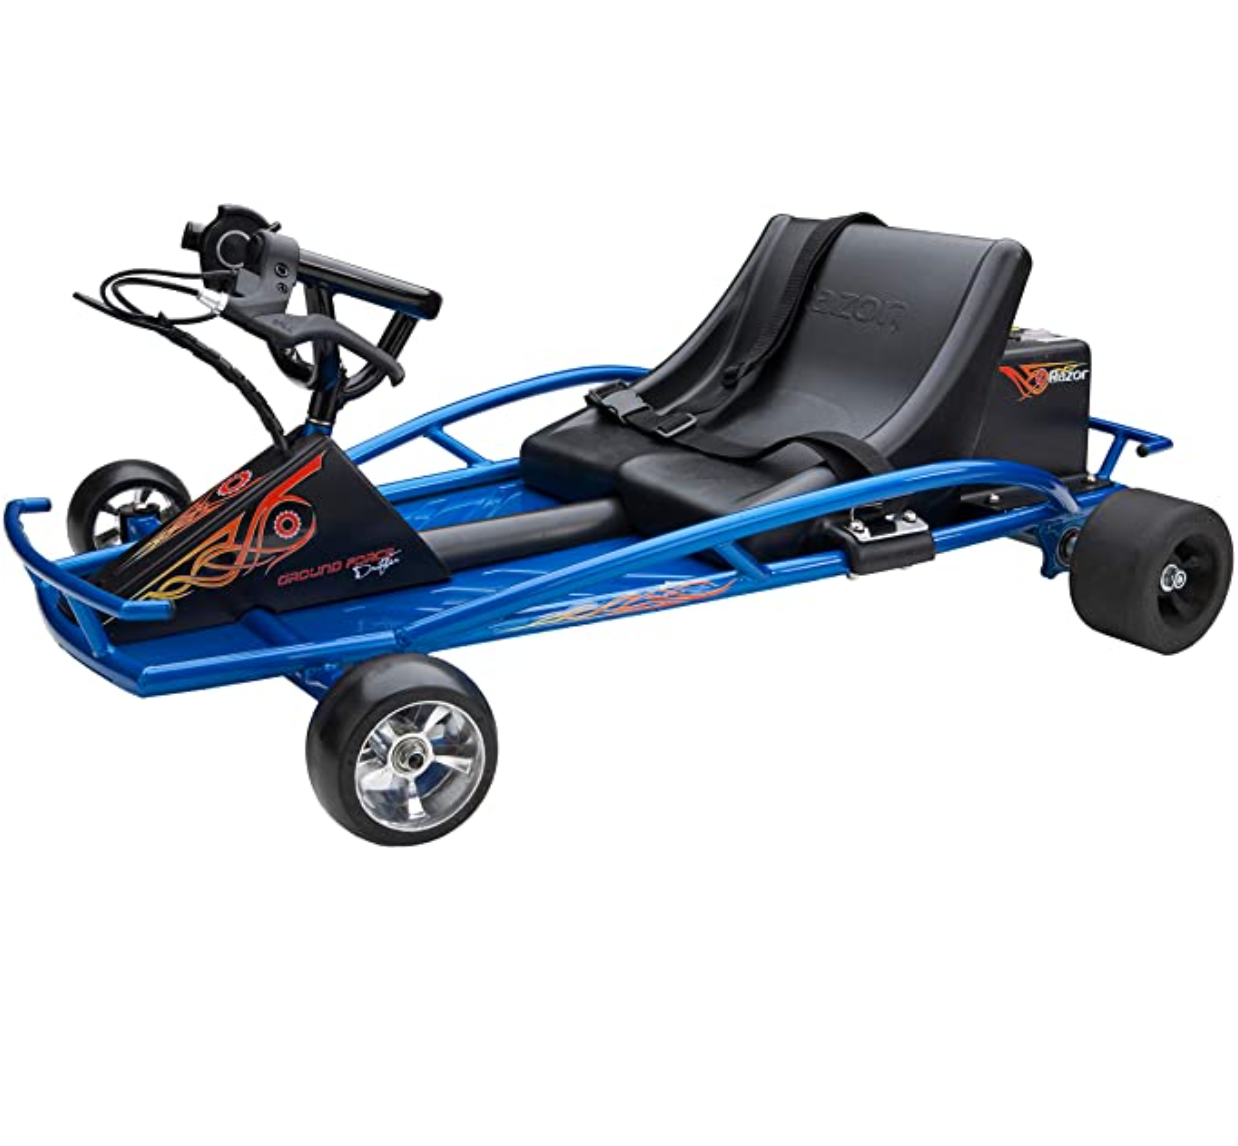 Электро дрифт карт. Дрифт картинг Razor. Razor Electric go Kart Battery. Электро дрифт картинг. Razor Crazy Cart XL.